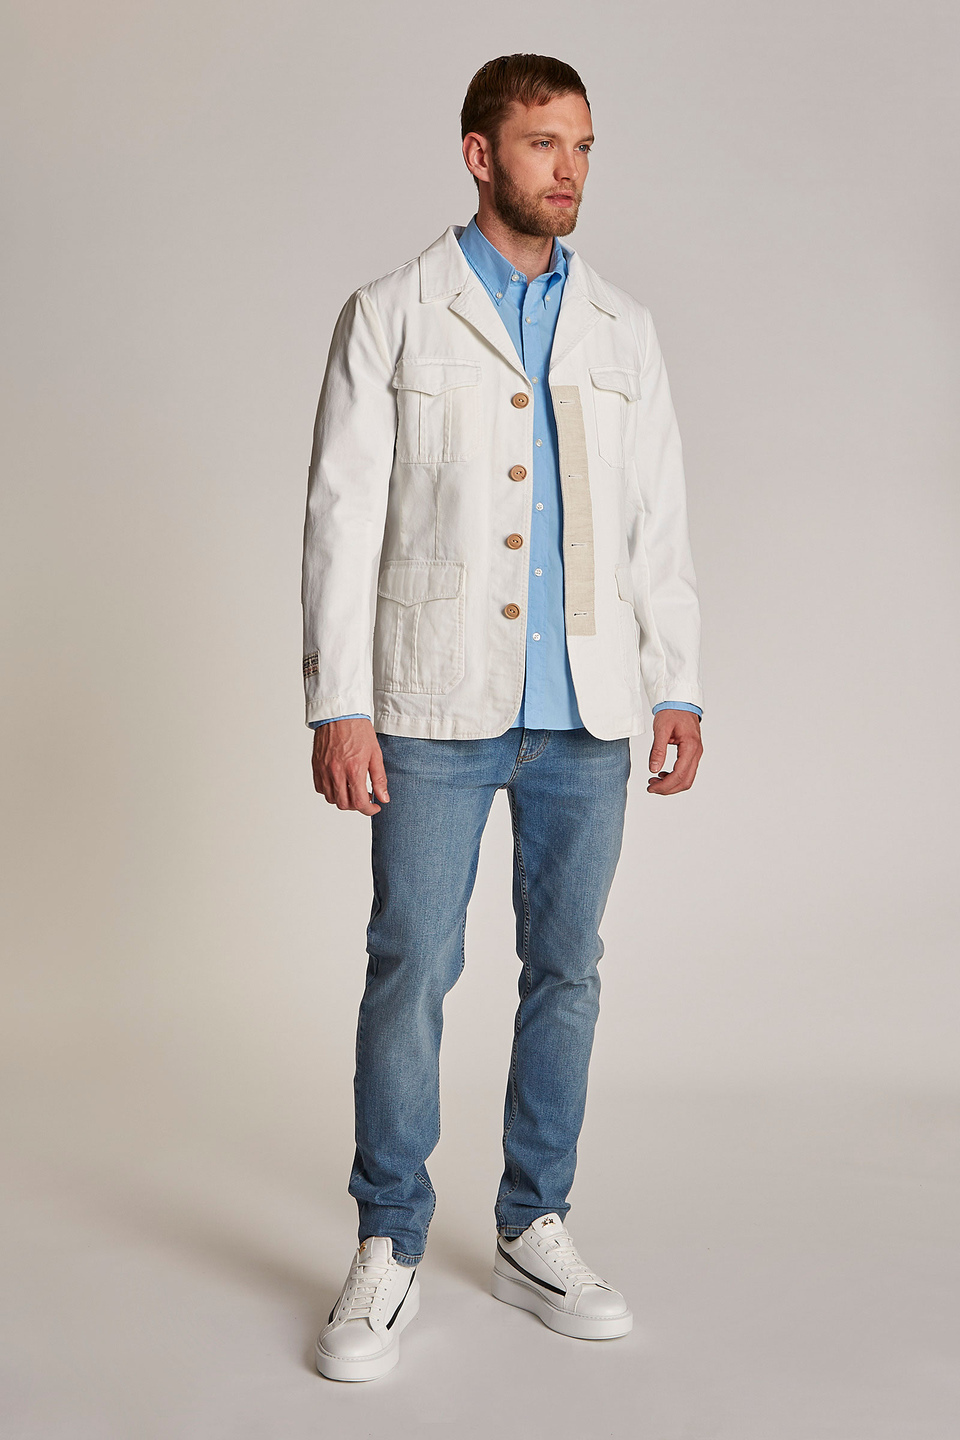 Chaqueta de hombre de algodón 100 %, modelo sahariana, corte regular | La Martina - Official Online Shop